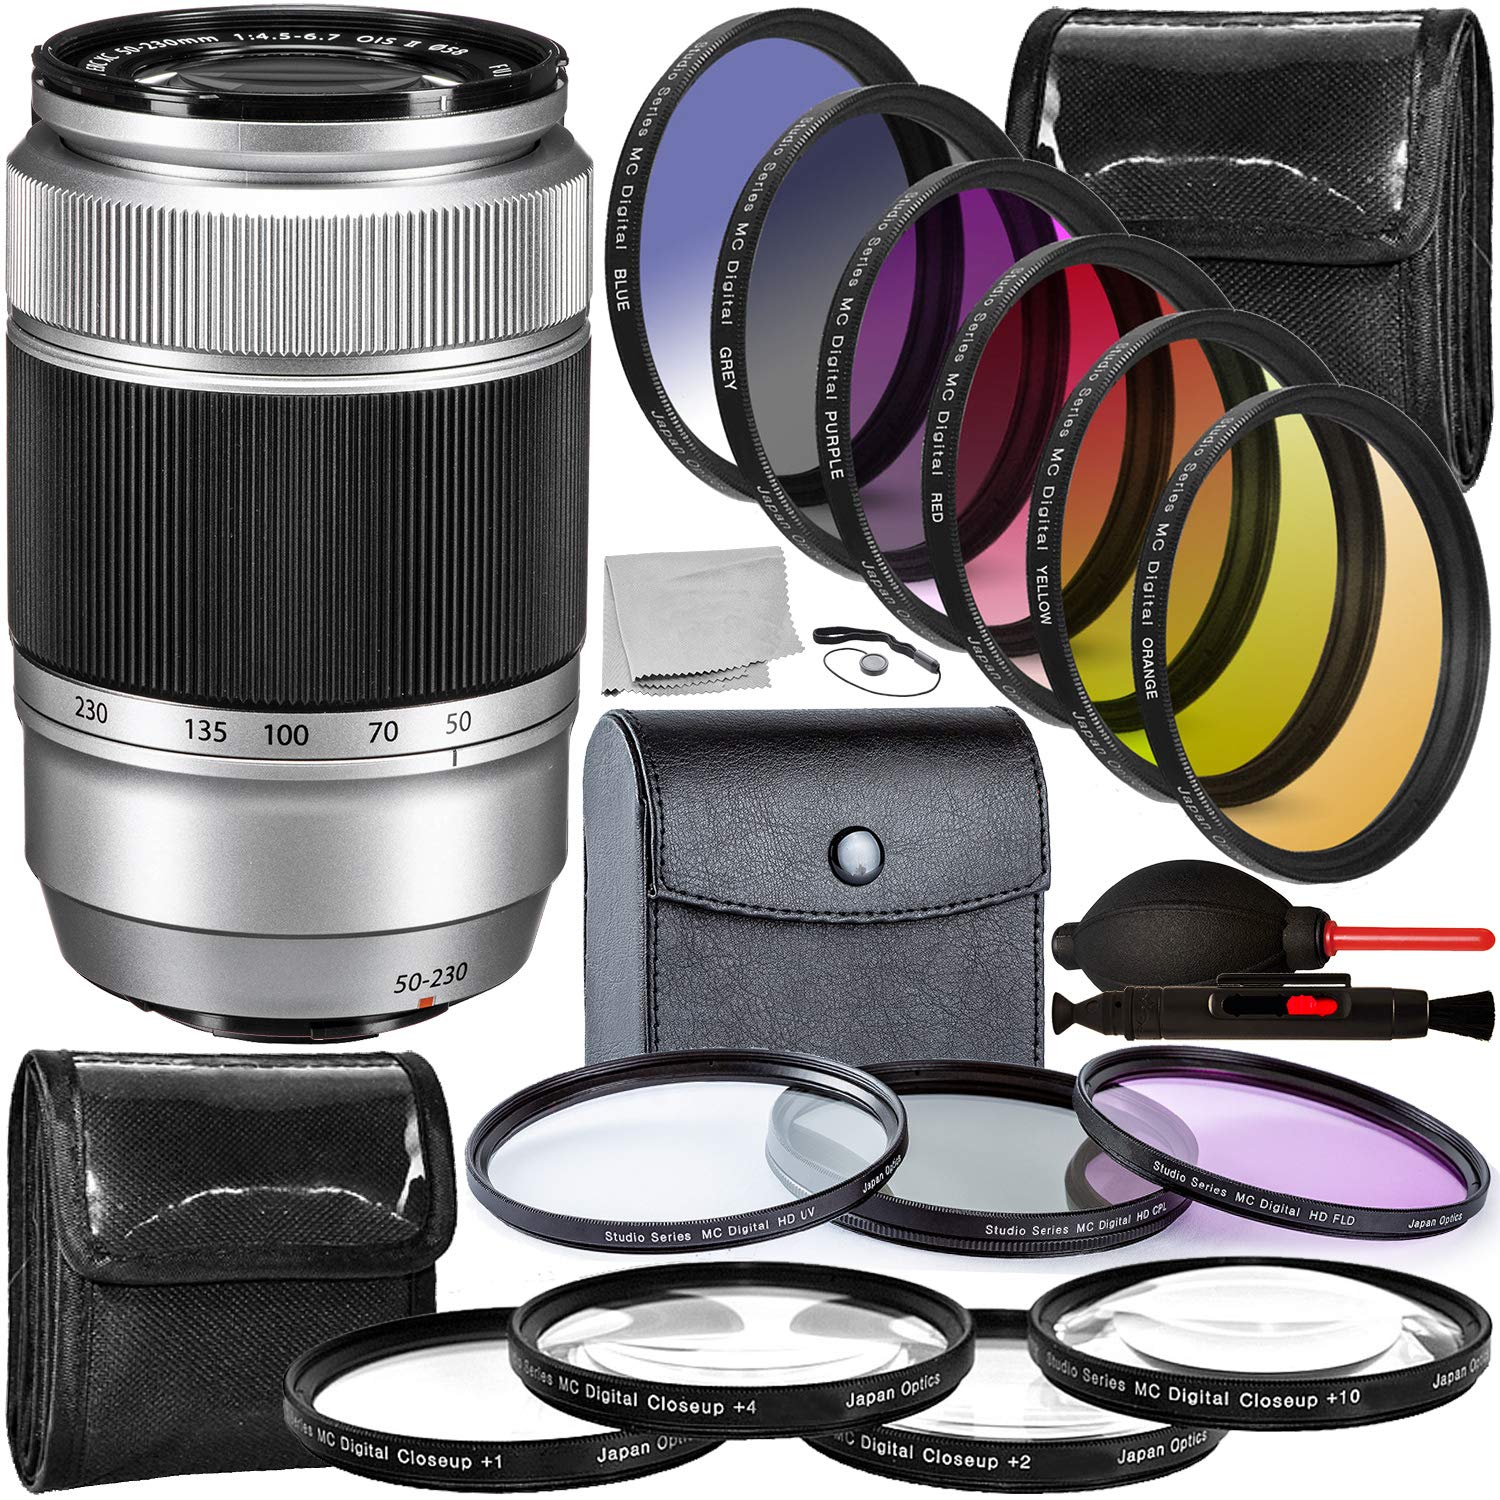 FUJIFILM XC 50-230mm f/4.5-6.7 OIS II Lens (Silver) - 16460795 with Accessory Bundle